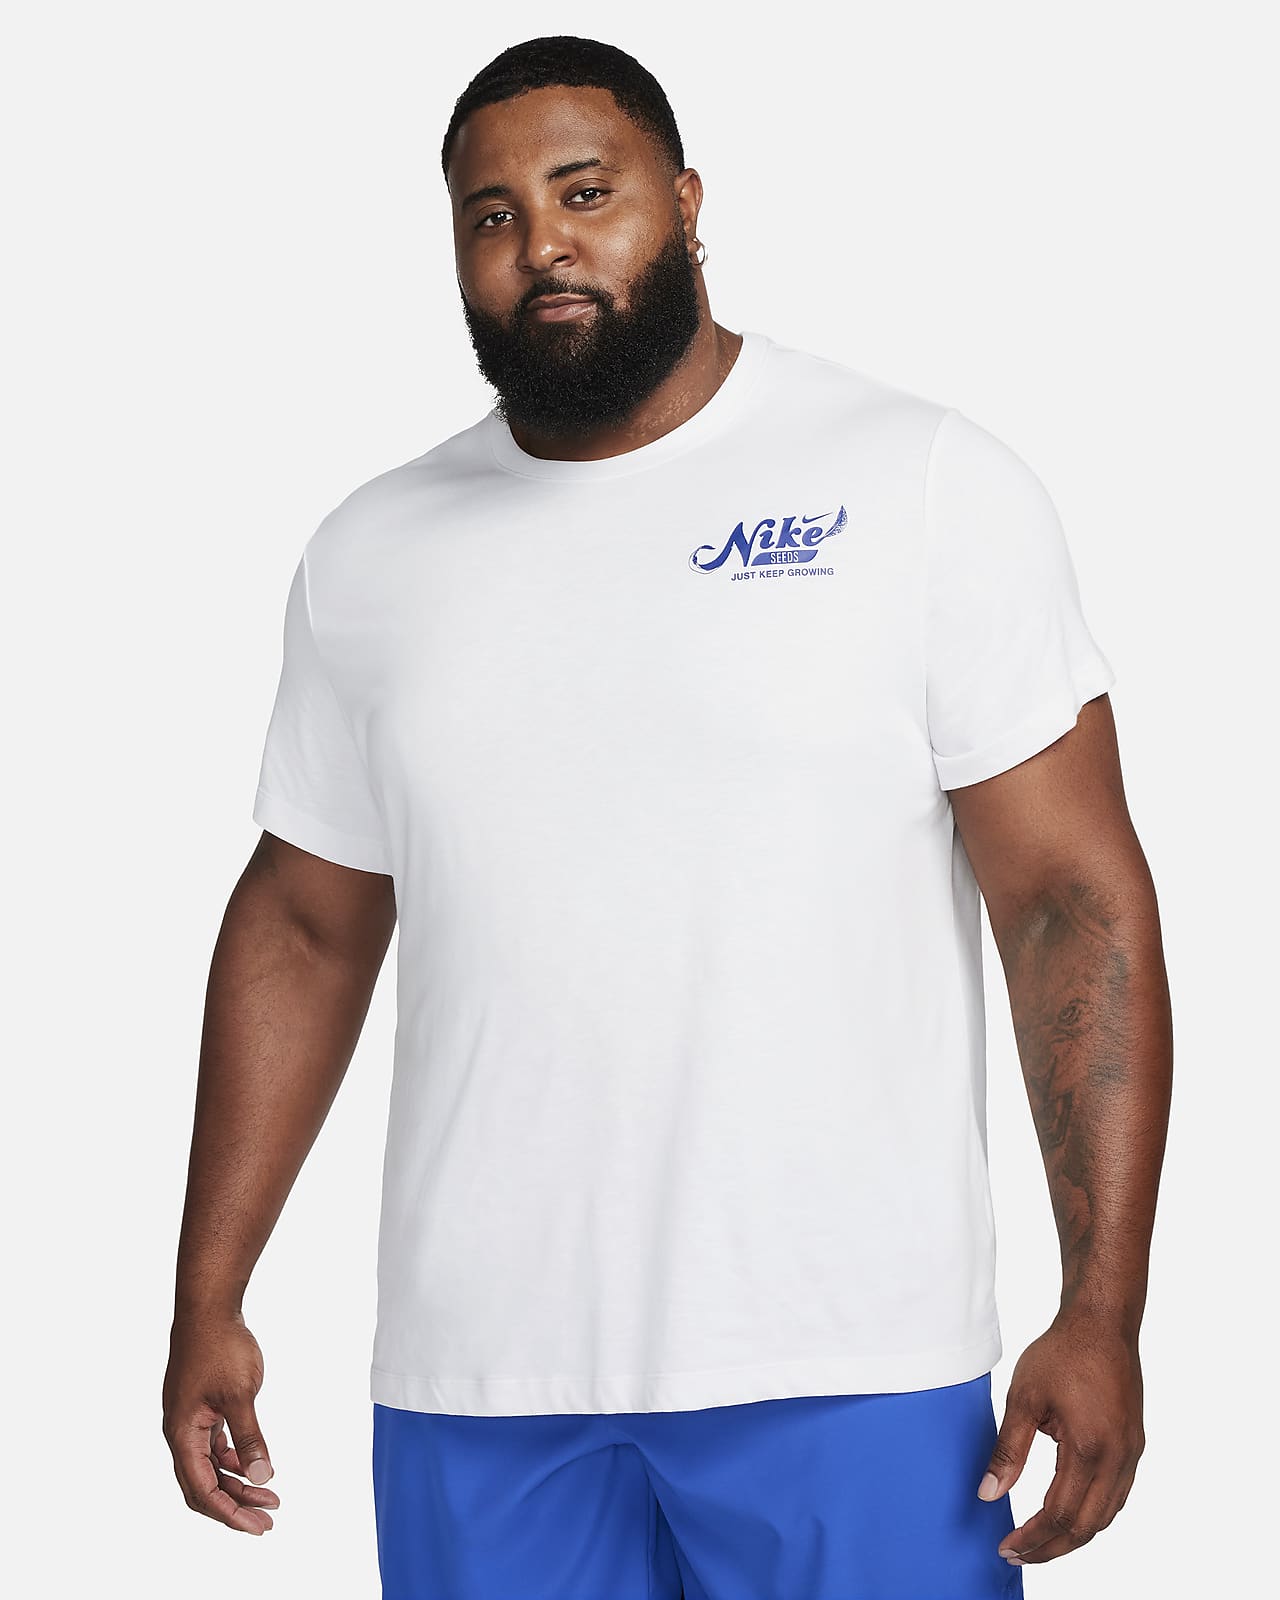 Nike Men's Dri-FIT Fitness T-Shirt.